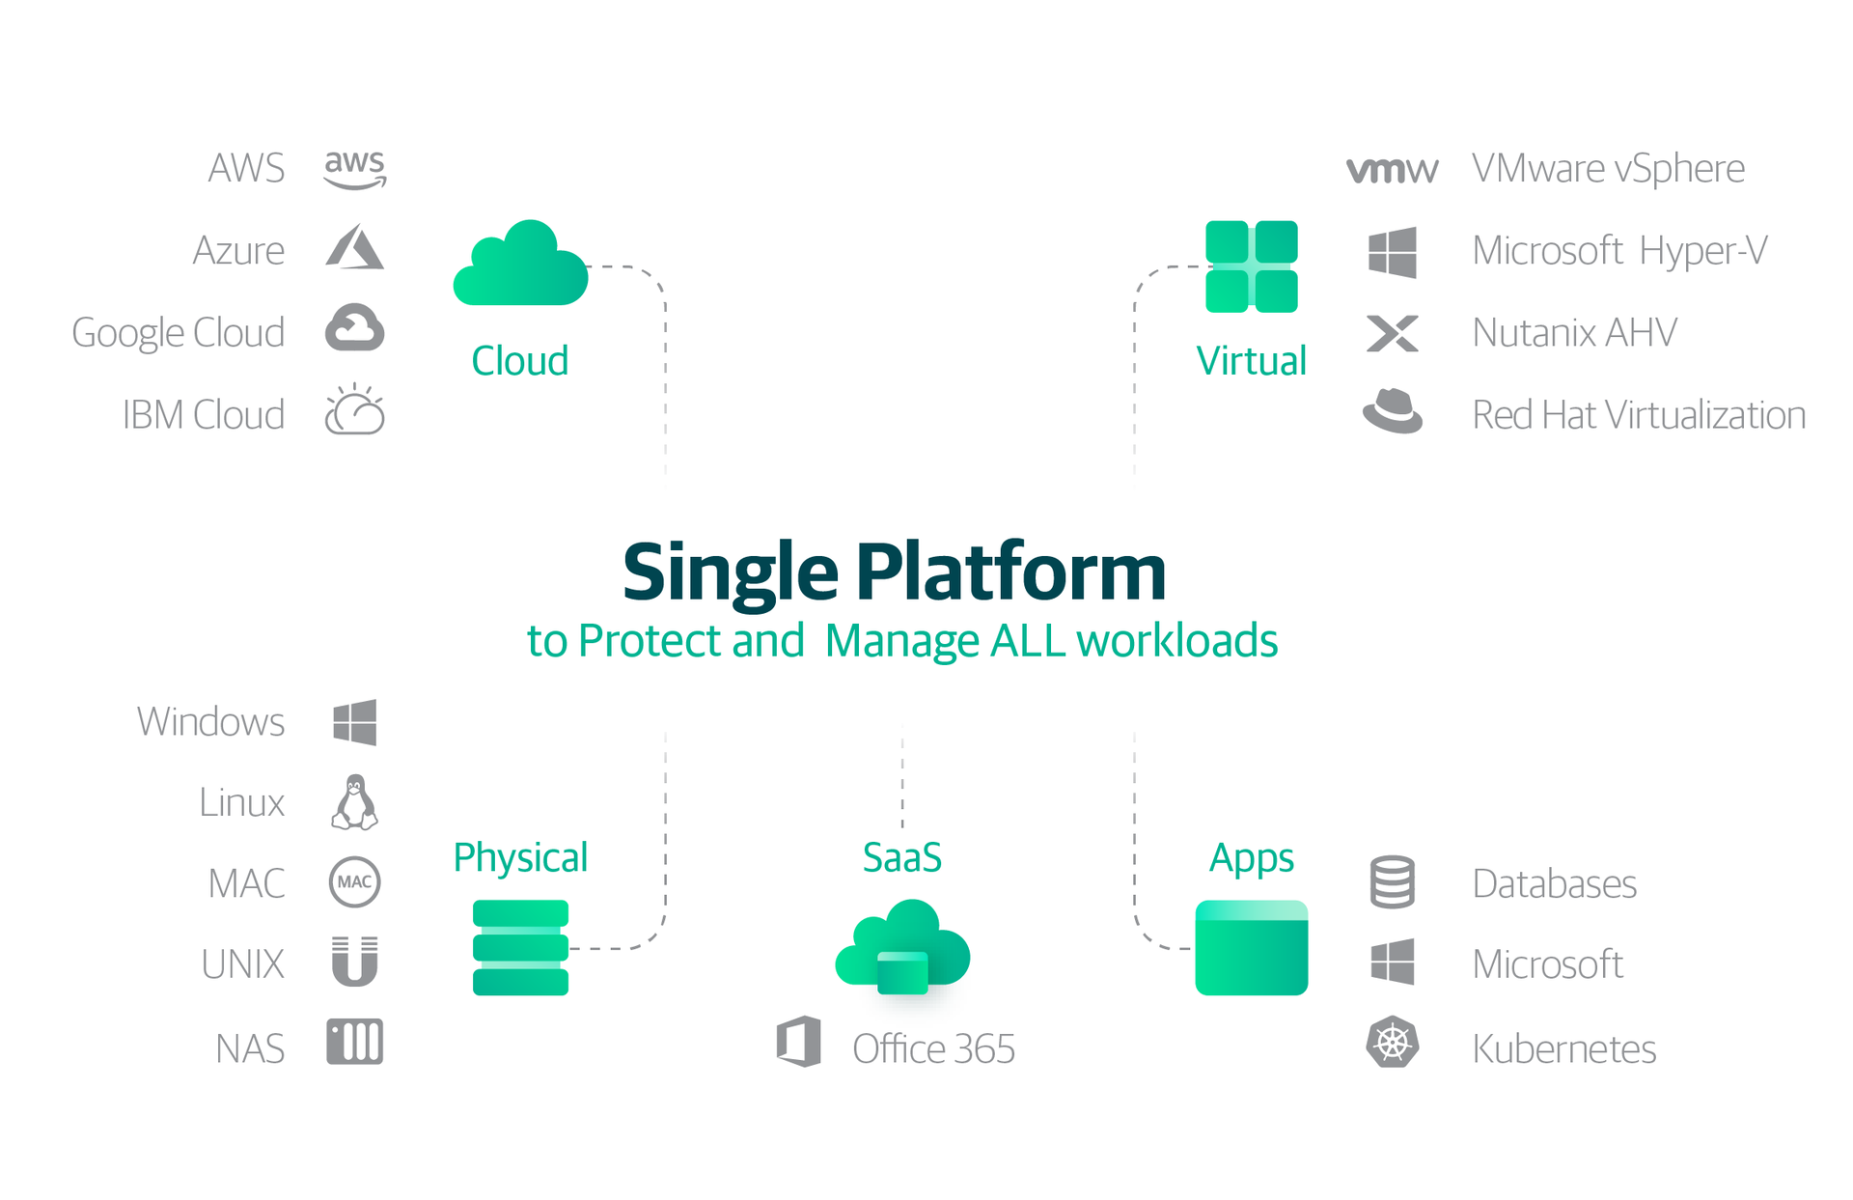 Veeam single platform for all workloads